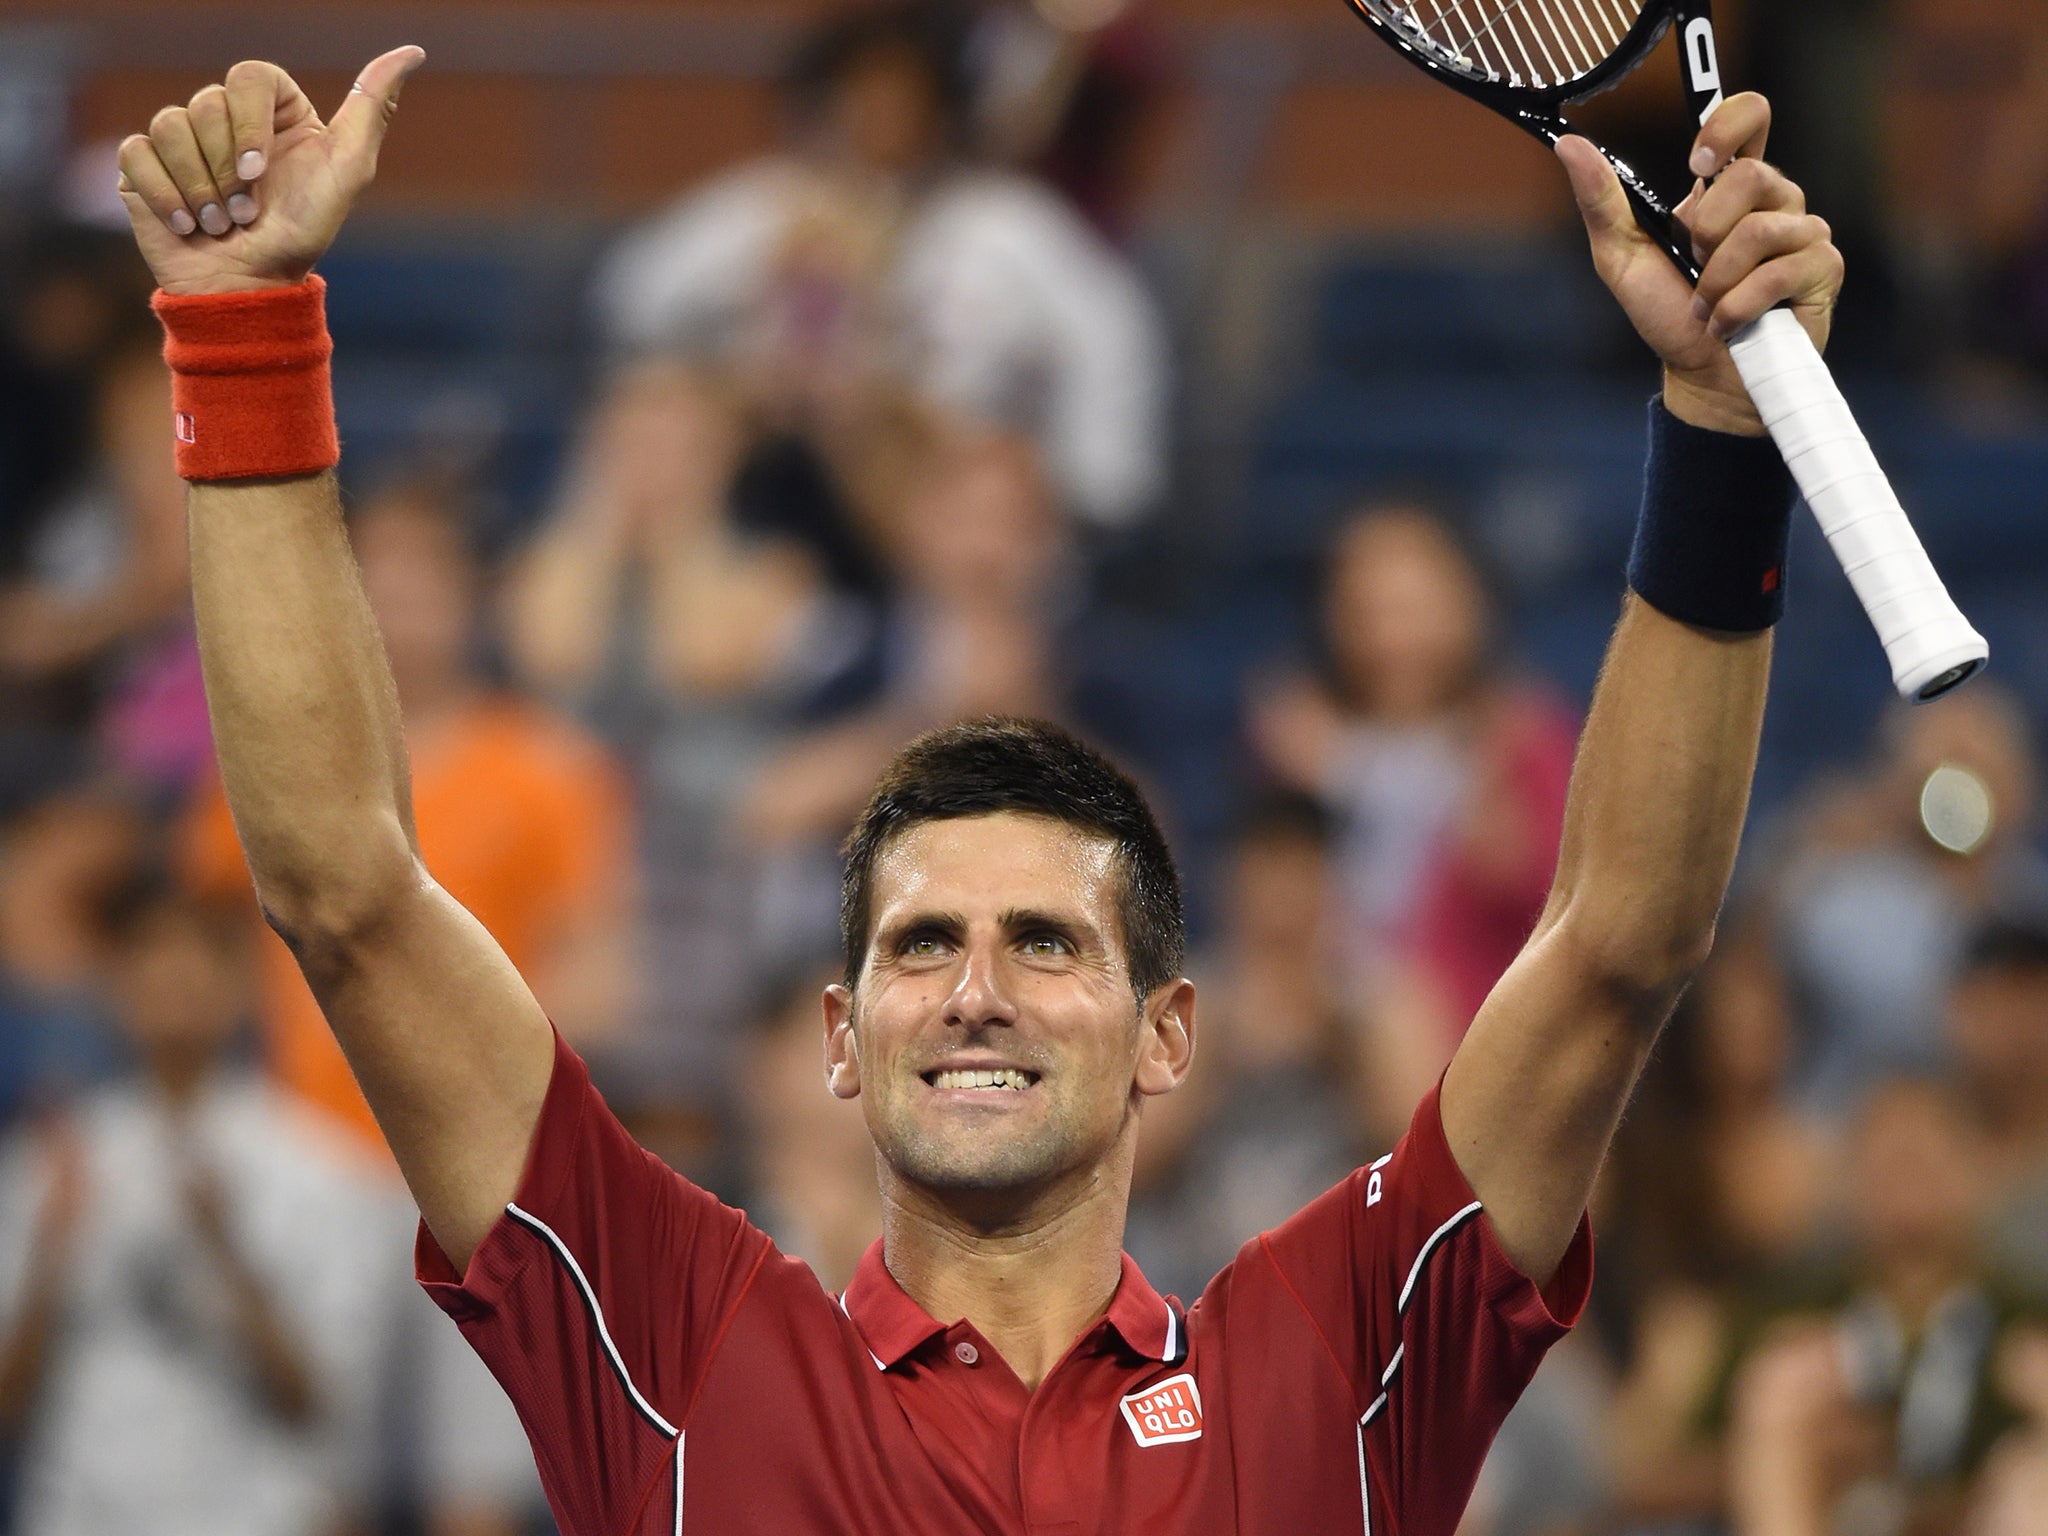 Novak Djokovic of Serbia celebratee his win over Diego Schwartzman of Argentina during their US Open 2014 men's singles match